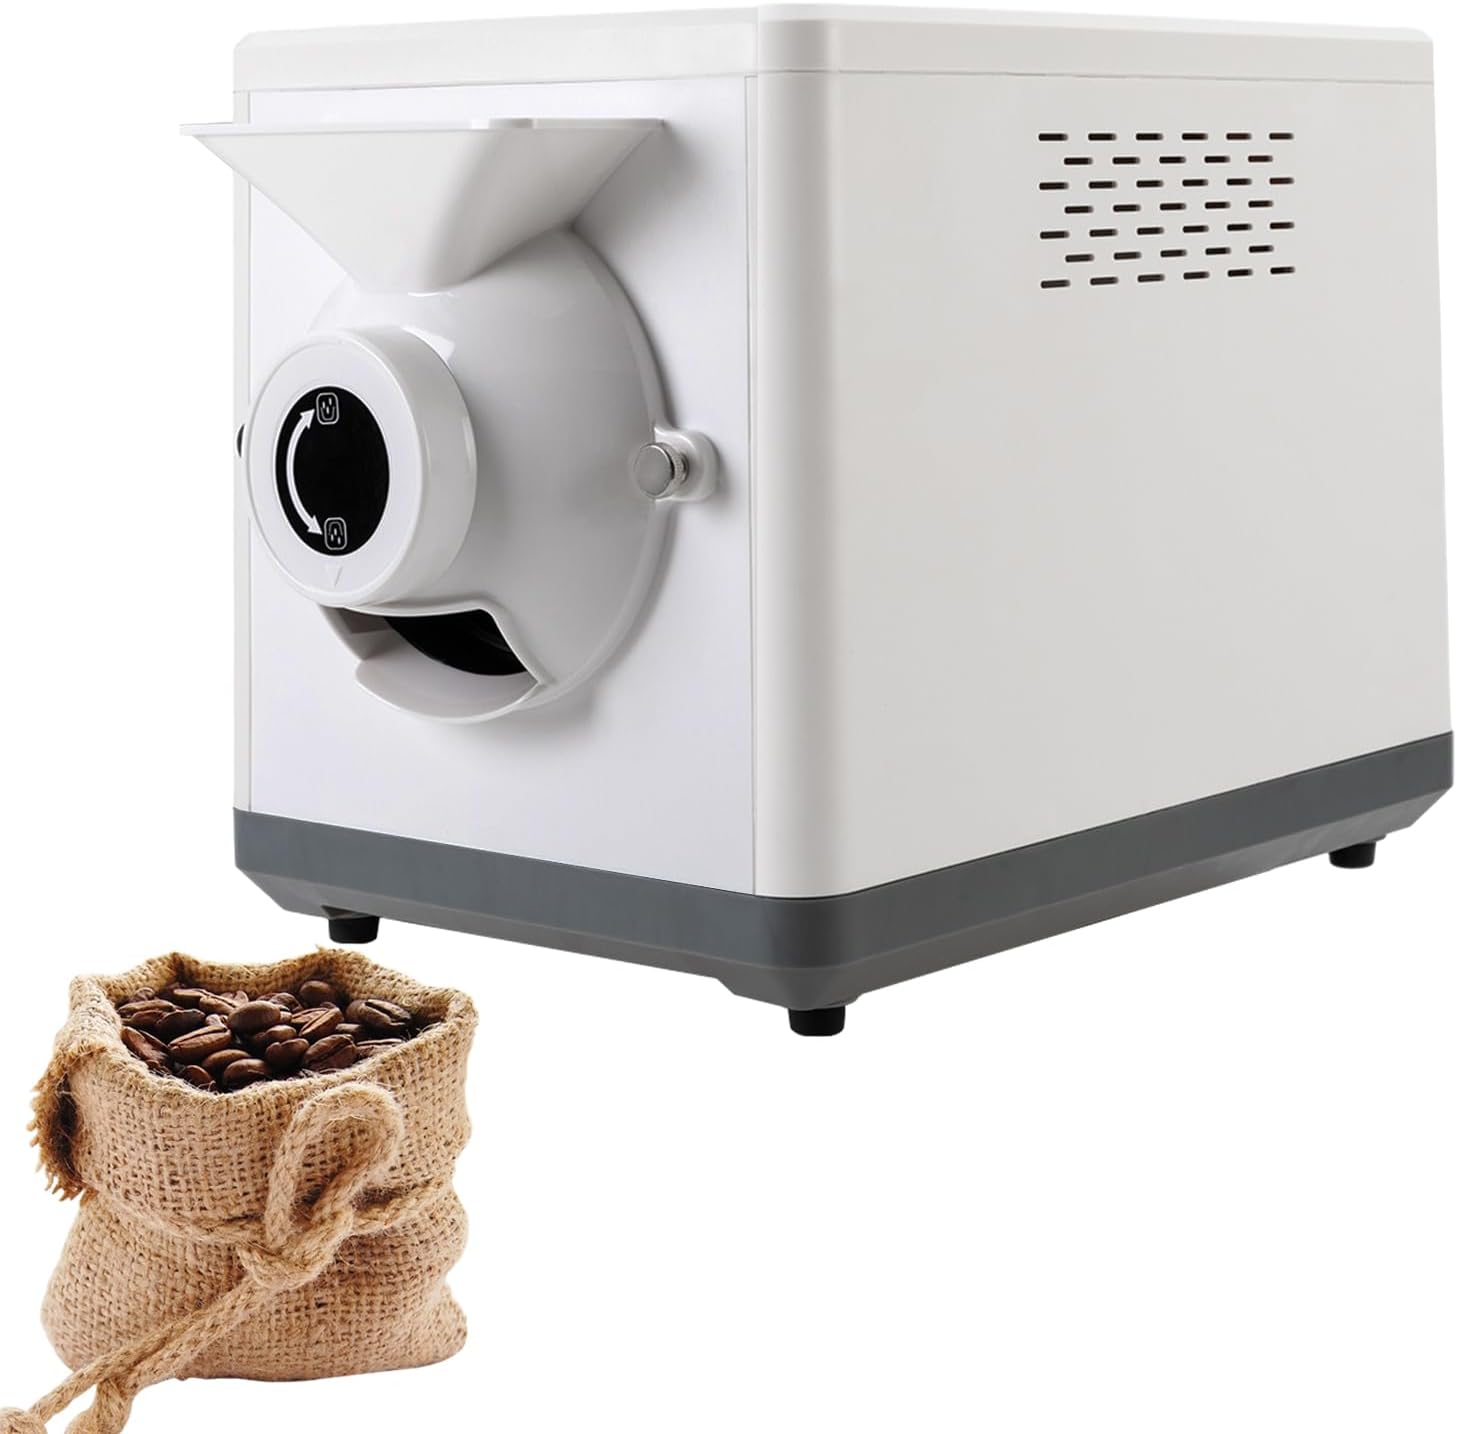 Kolhgnse Electric Coffee Roaster Machine Review